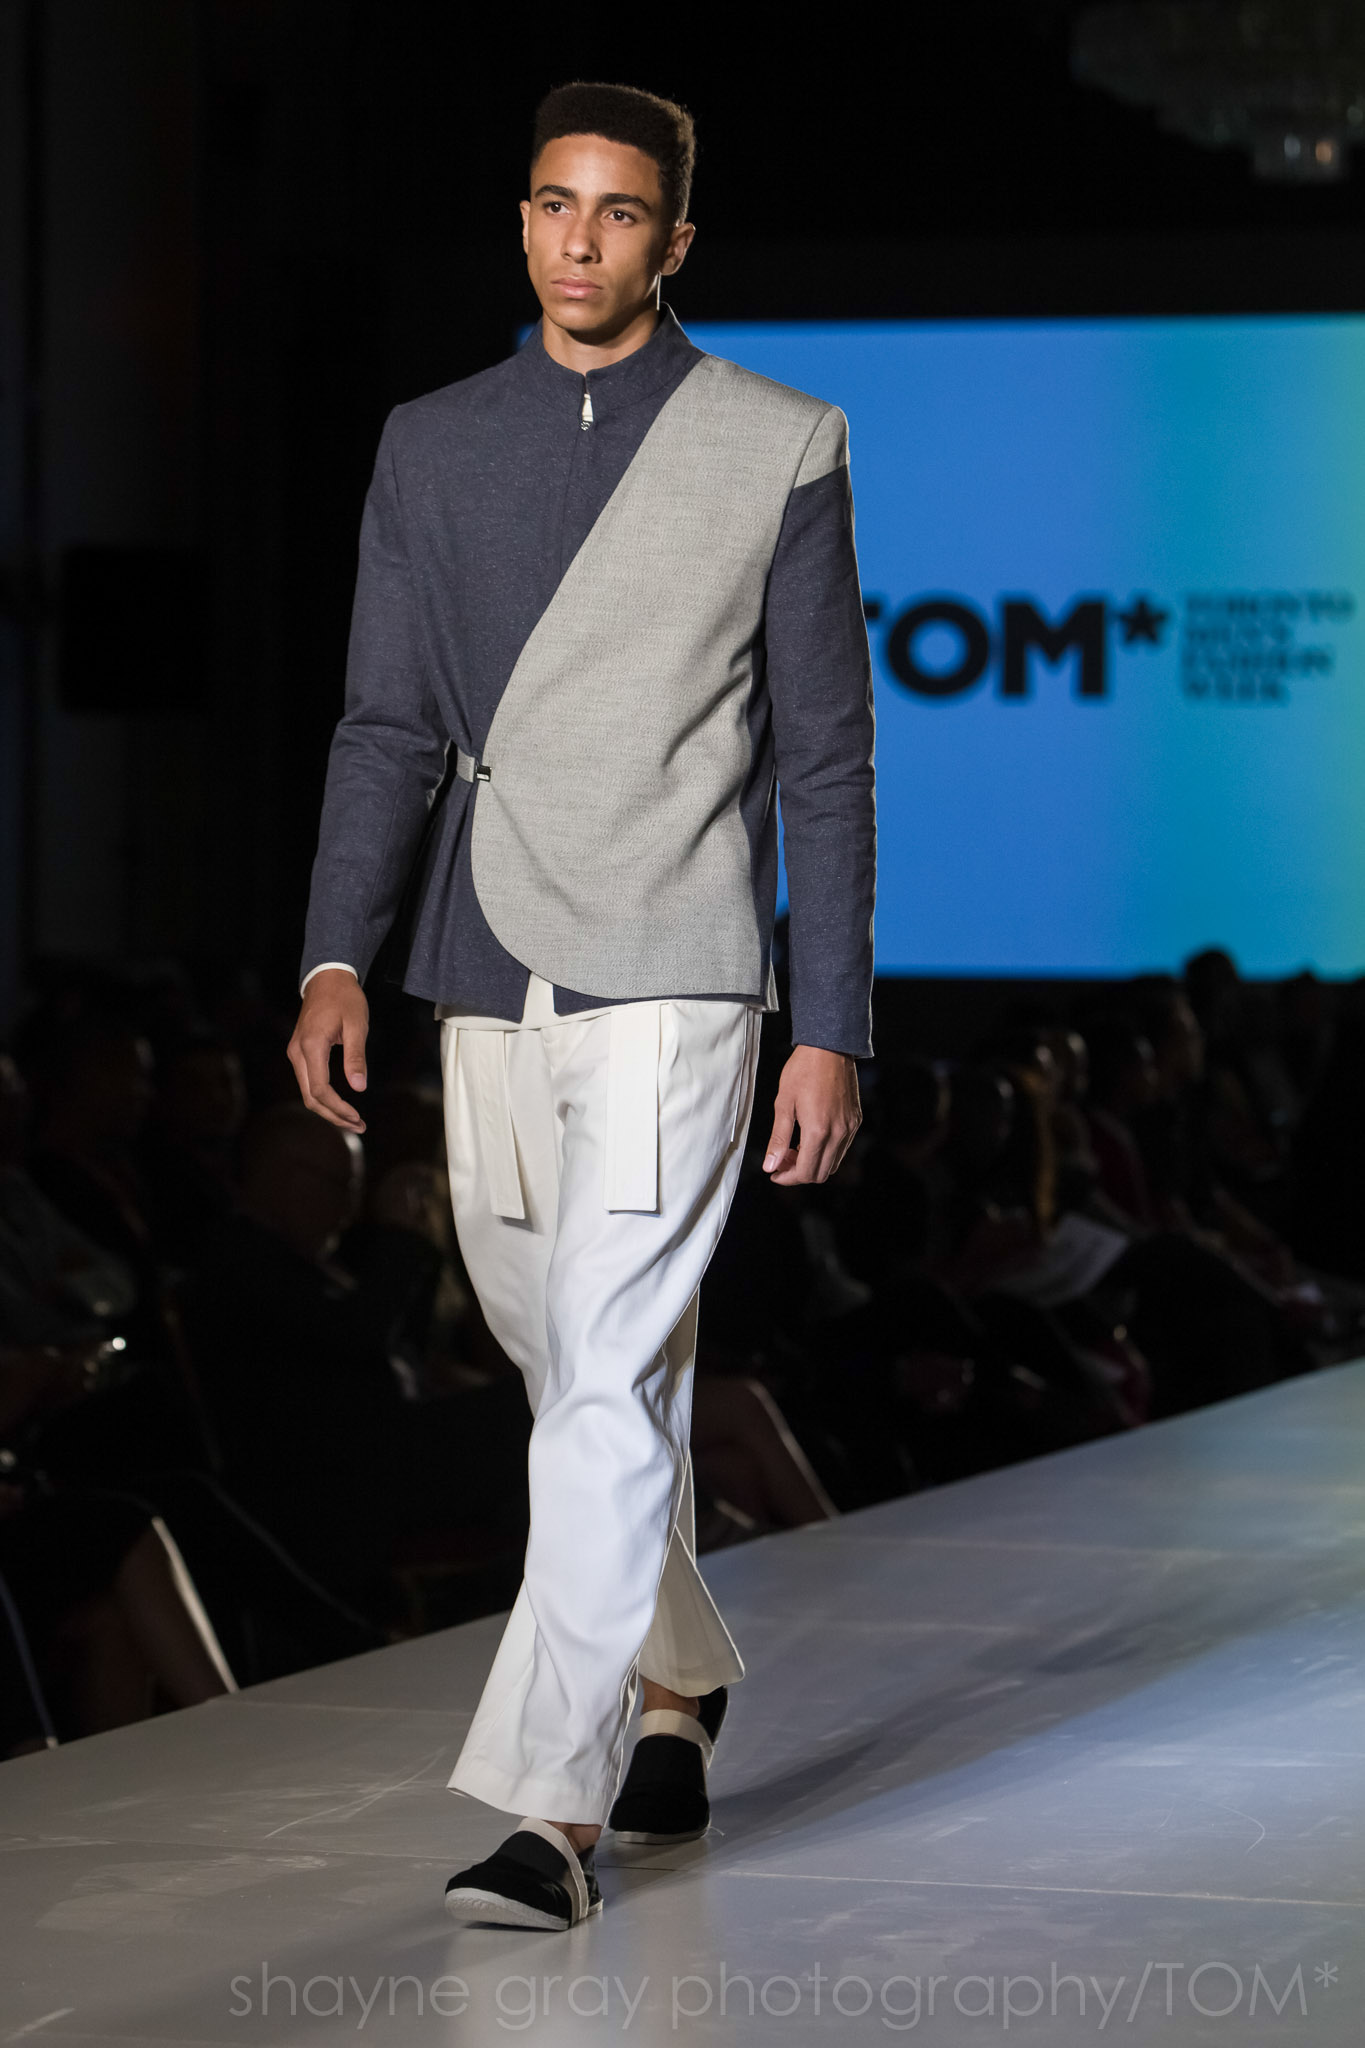 Shayne-Gray-Toronto-men's-fashion_week-TOM-christian-l'enfant-roi-6599.jpg